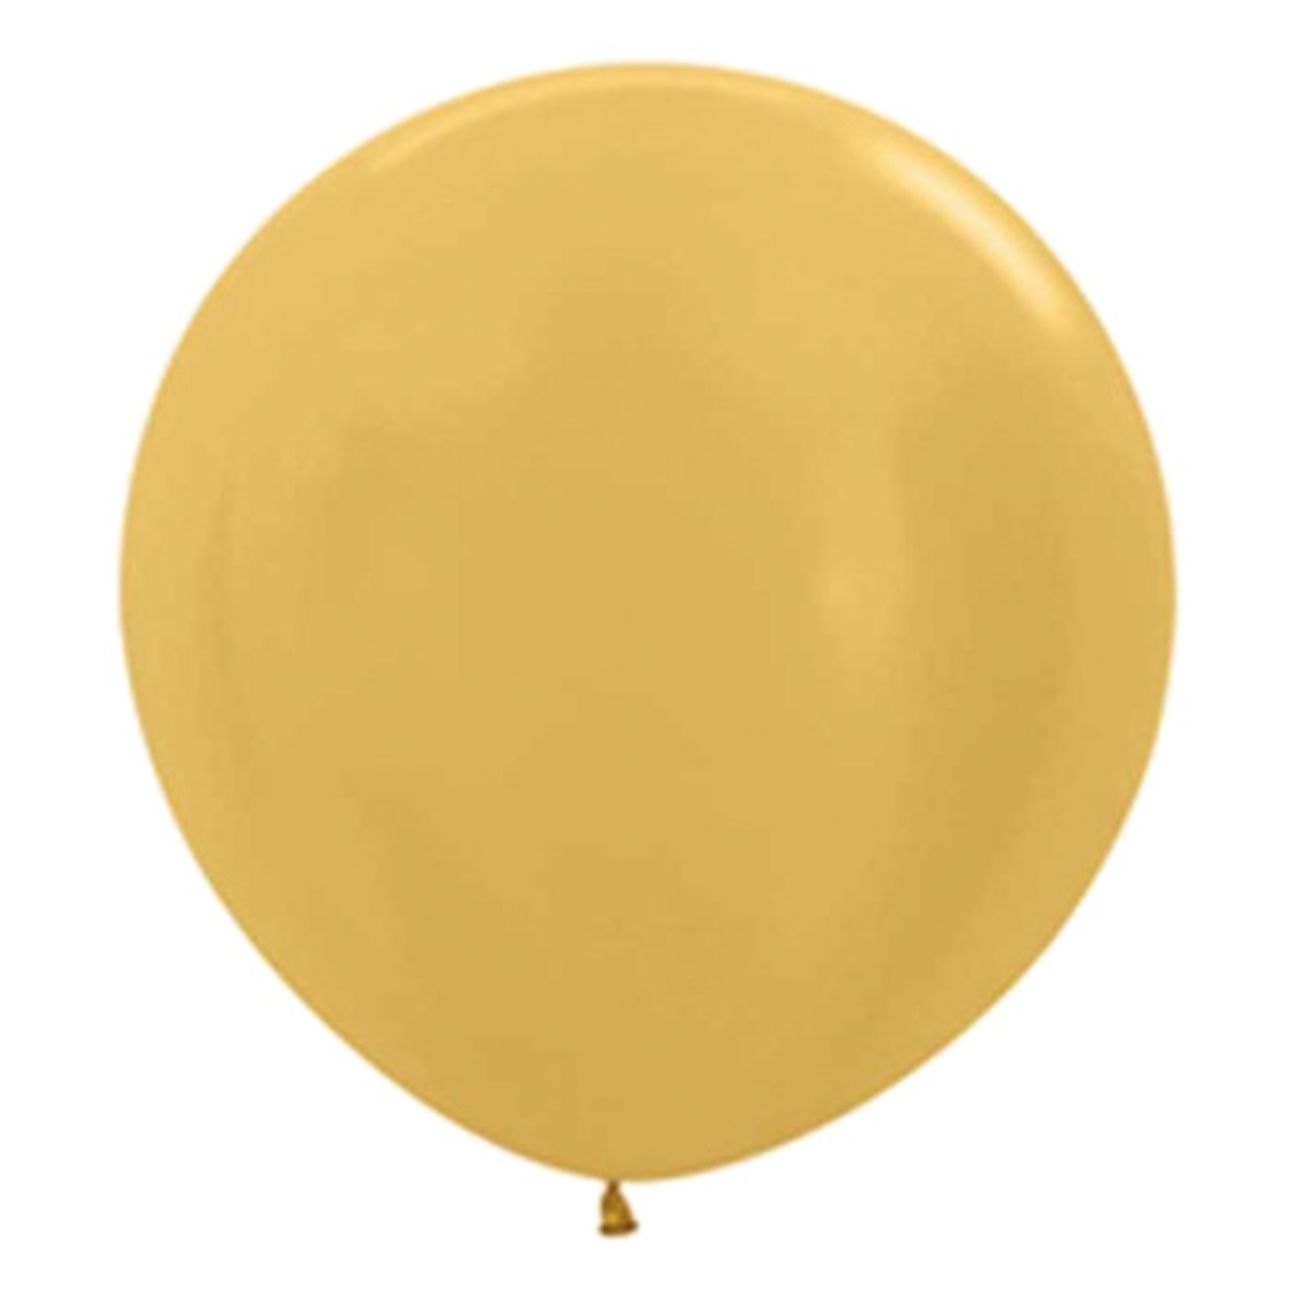 jatteballong-guld-1